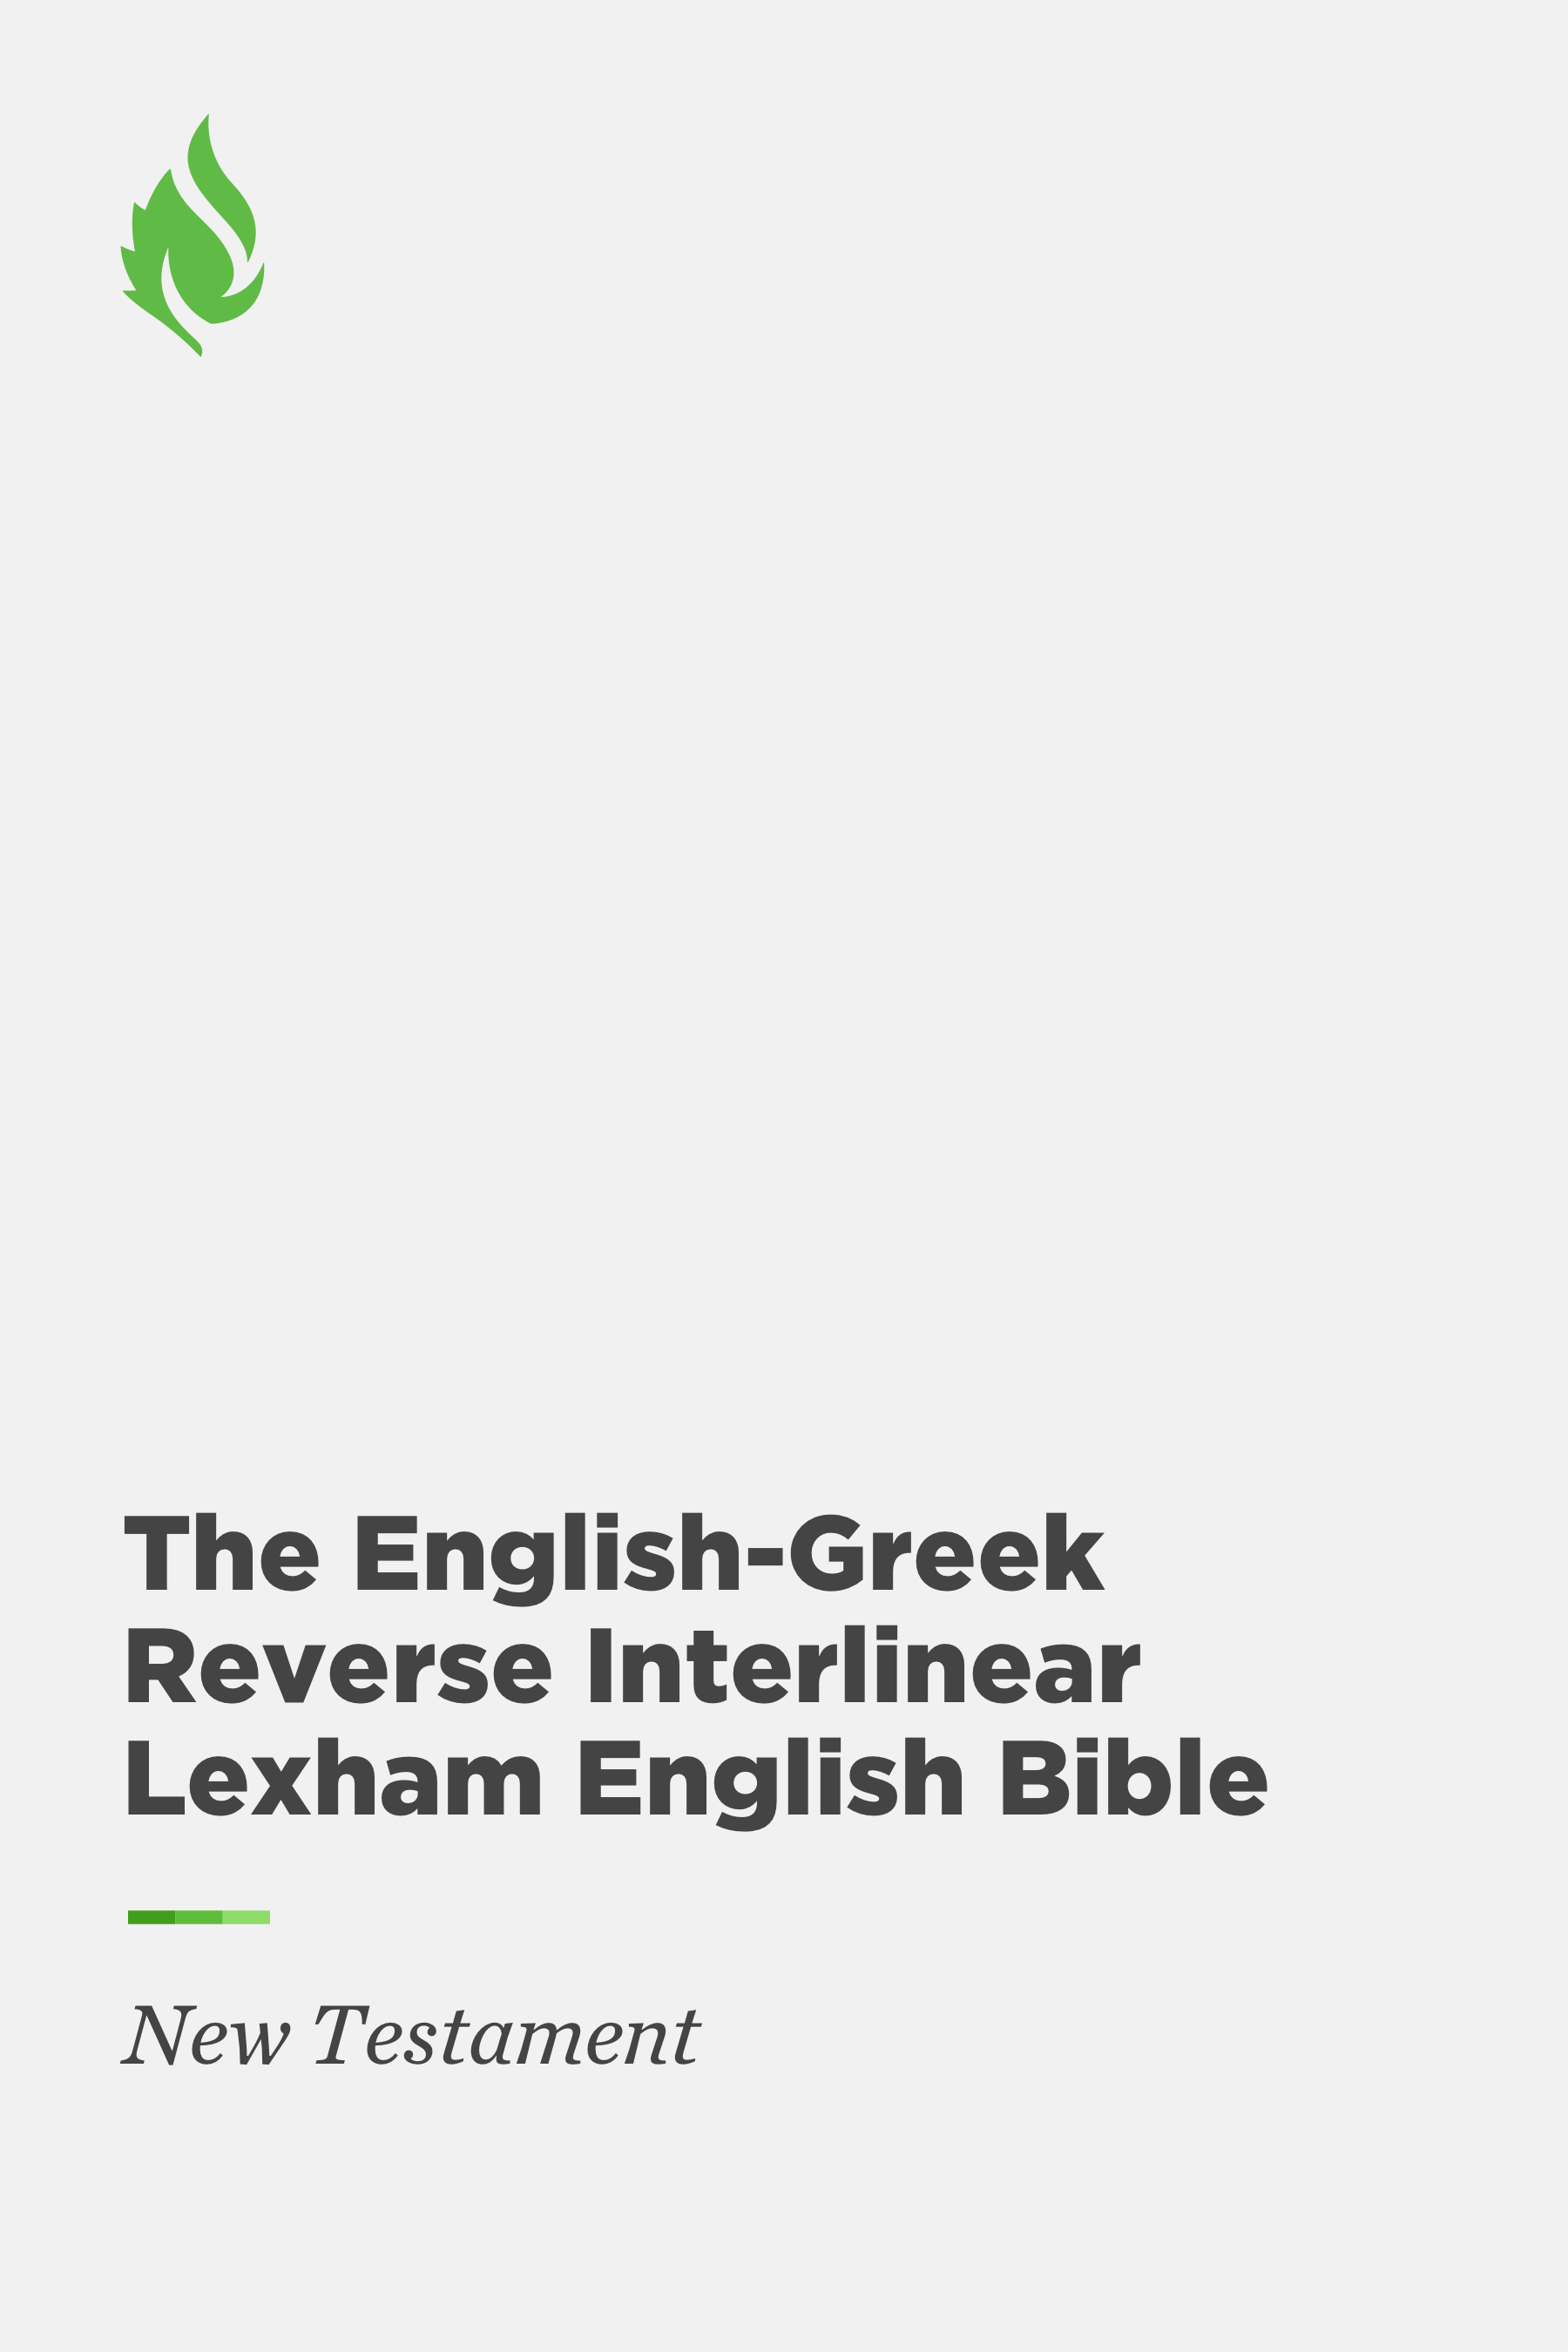 The English-Greek Reverse Interlinear New Testament Lexham English Bible